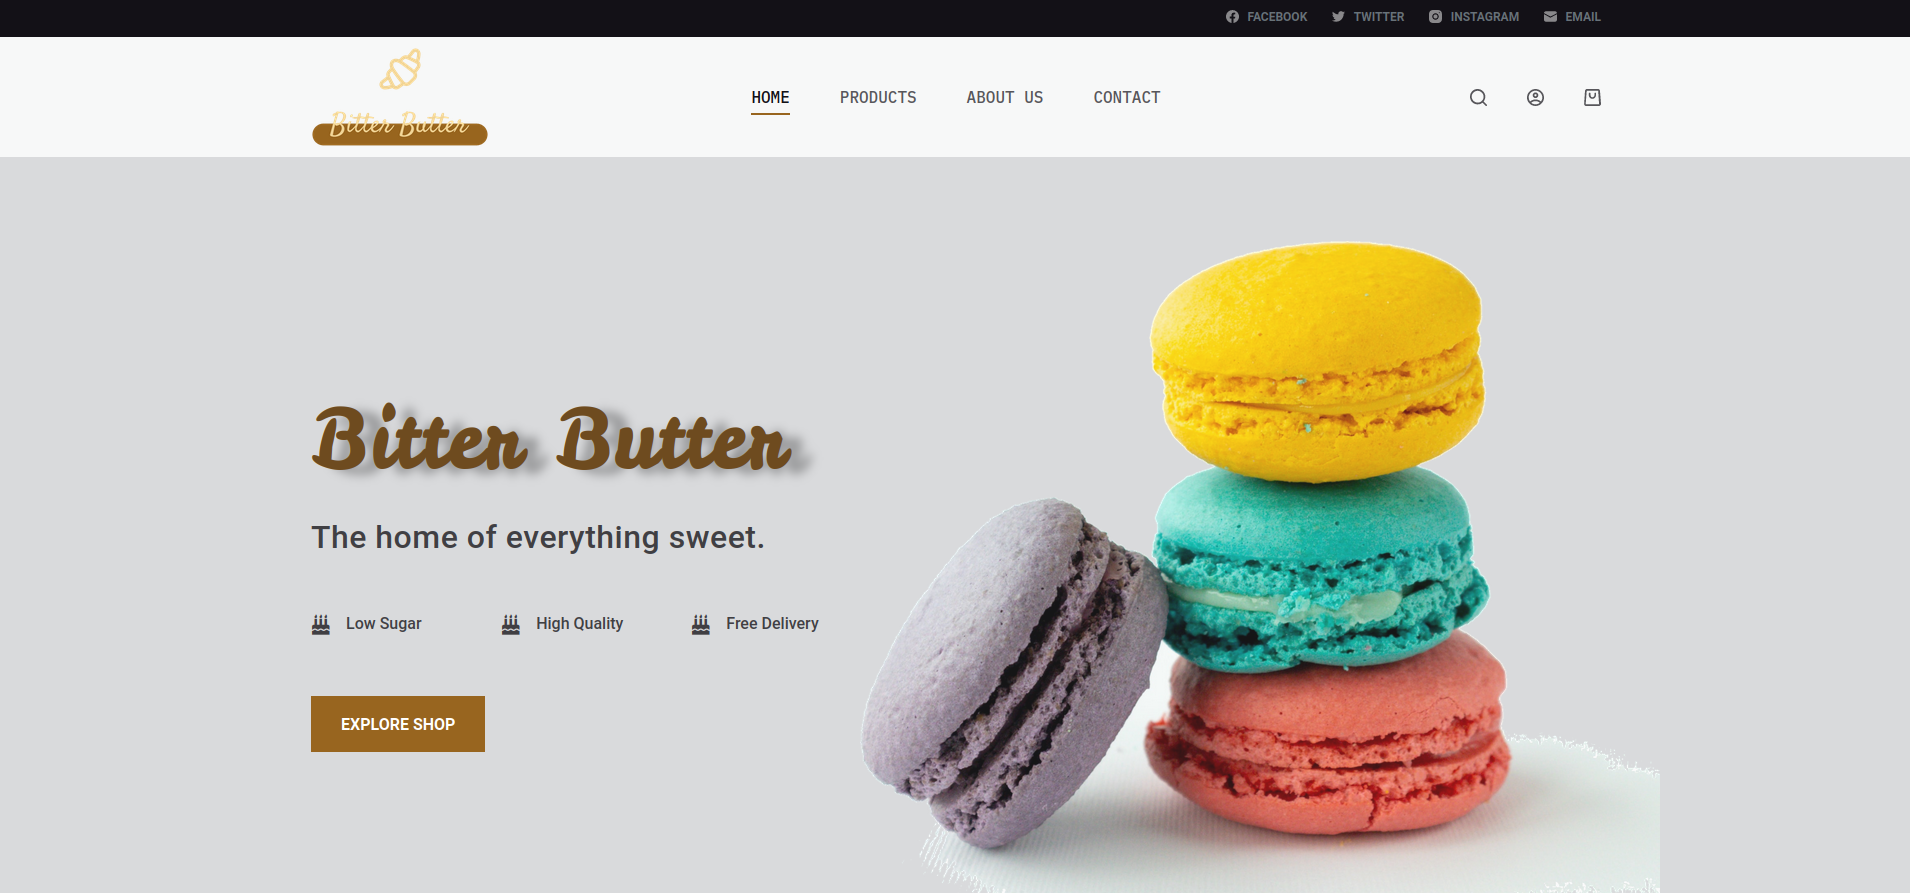 Image of Bitter Butter website.